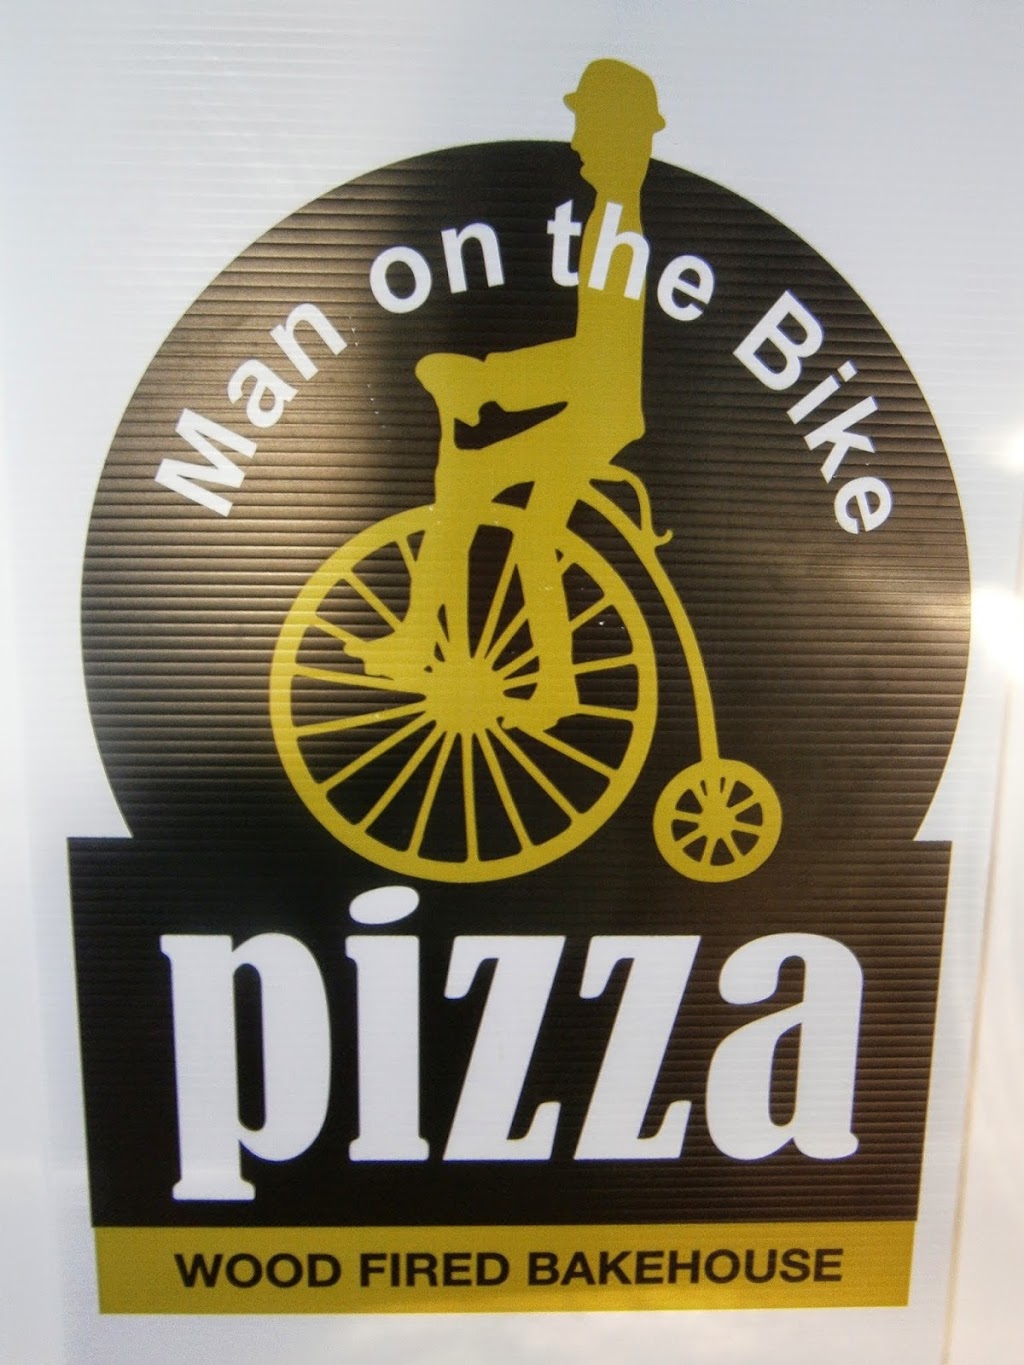 Man On The Bike Pizza | 7 Trees Rd, Tallebudgera QLD 4228, Australia | Phone: (07) 5522 4999